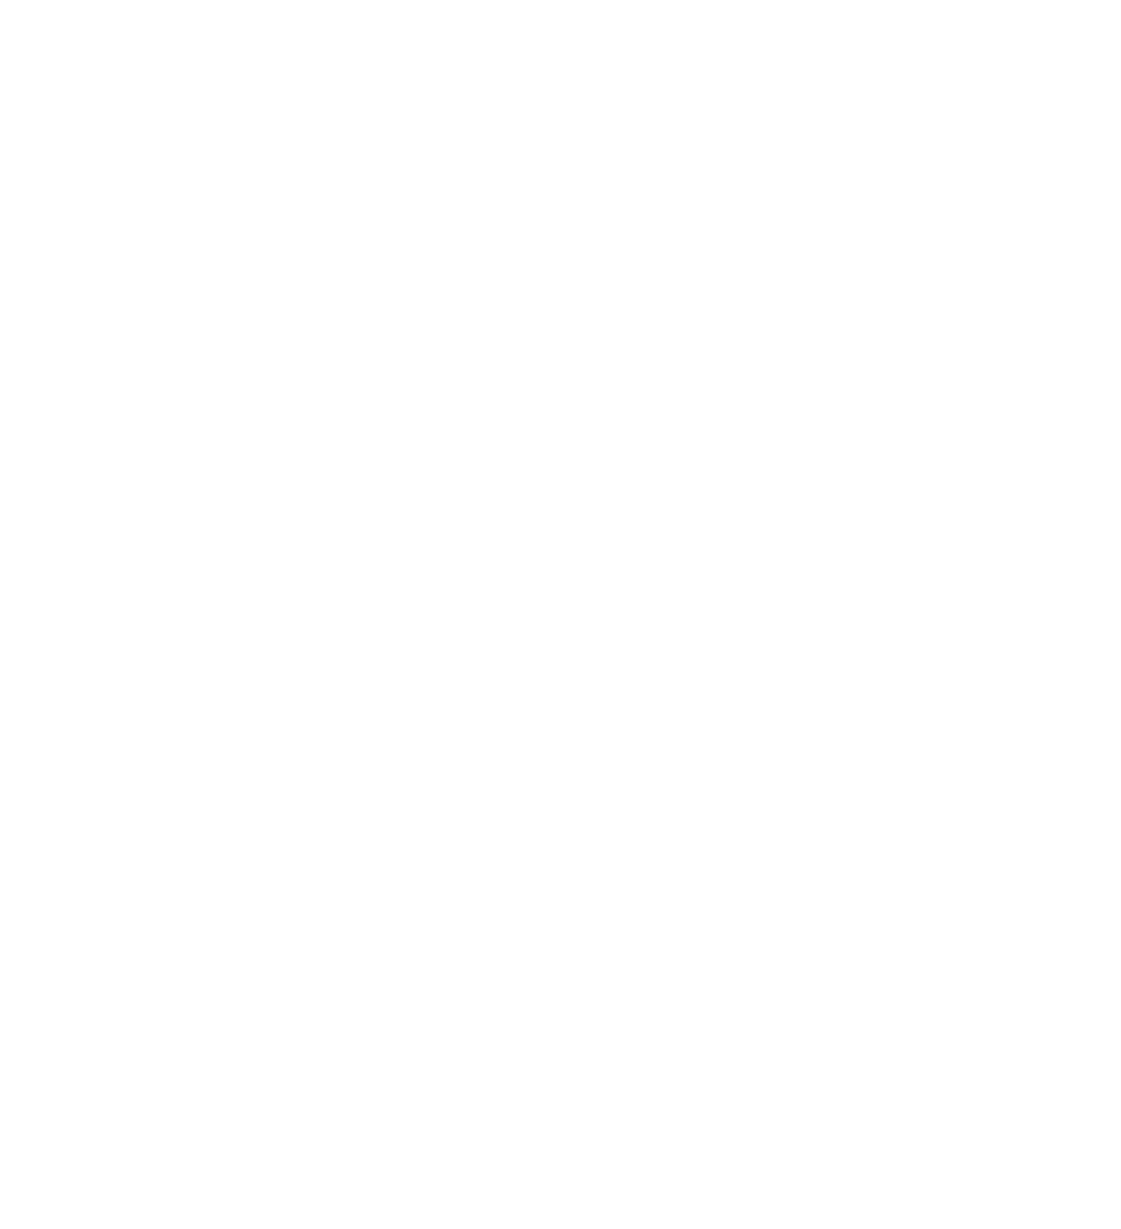 Black and White Windows Logo - Microsoft 8 Black Logo Png Image